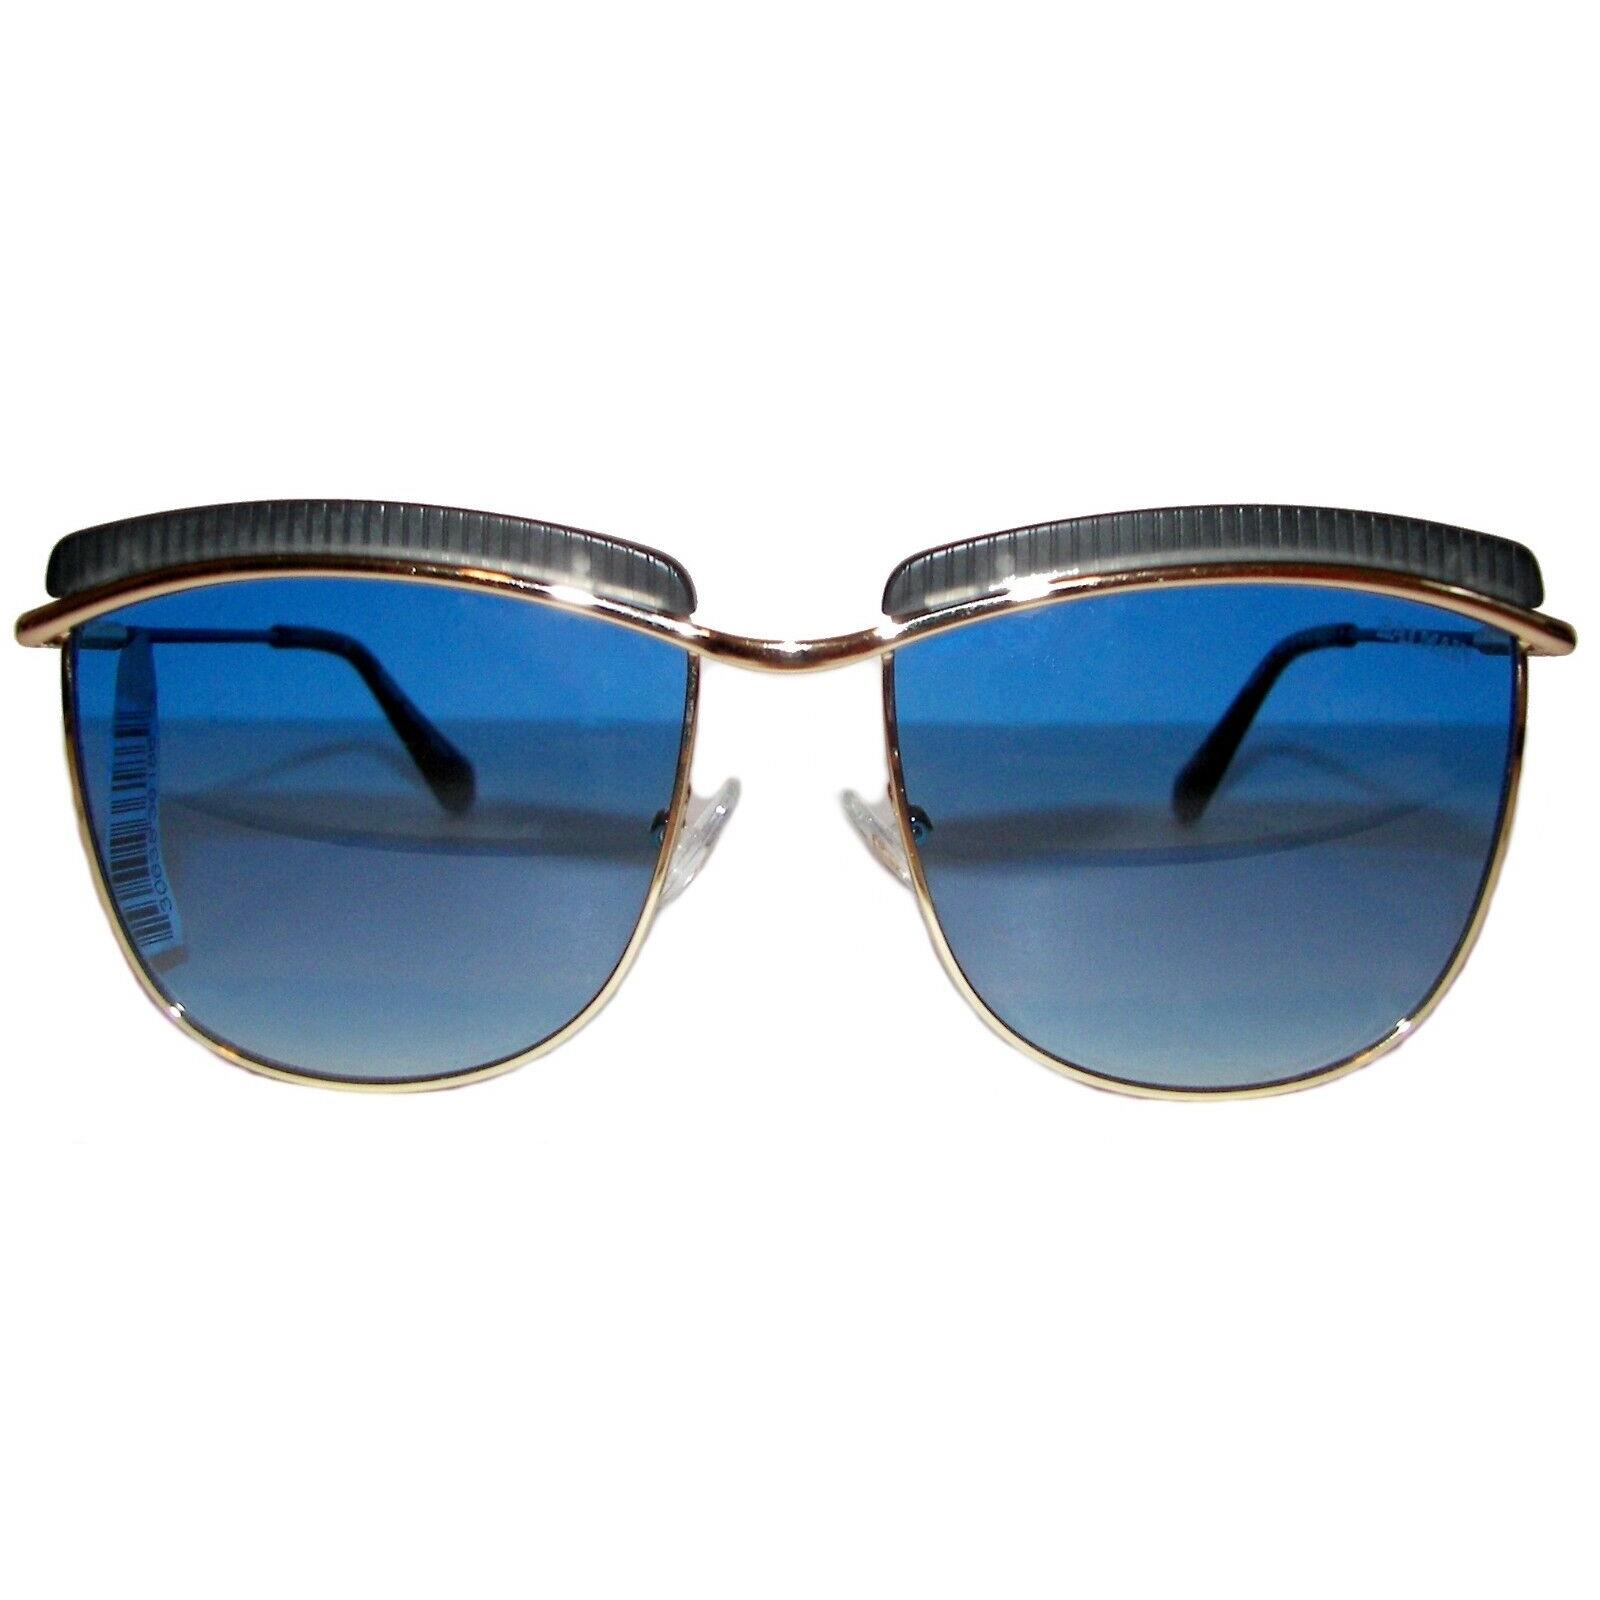 Balmain Gold Blue Gradient Sunglasses Made in France